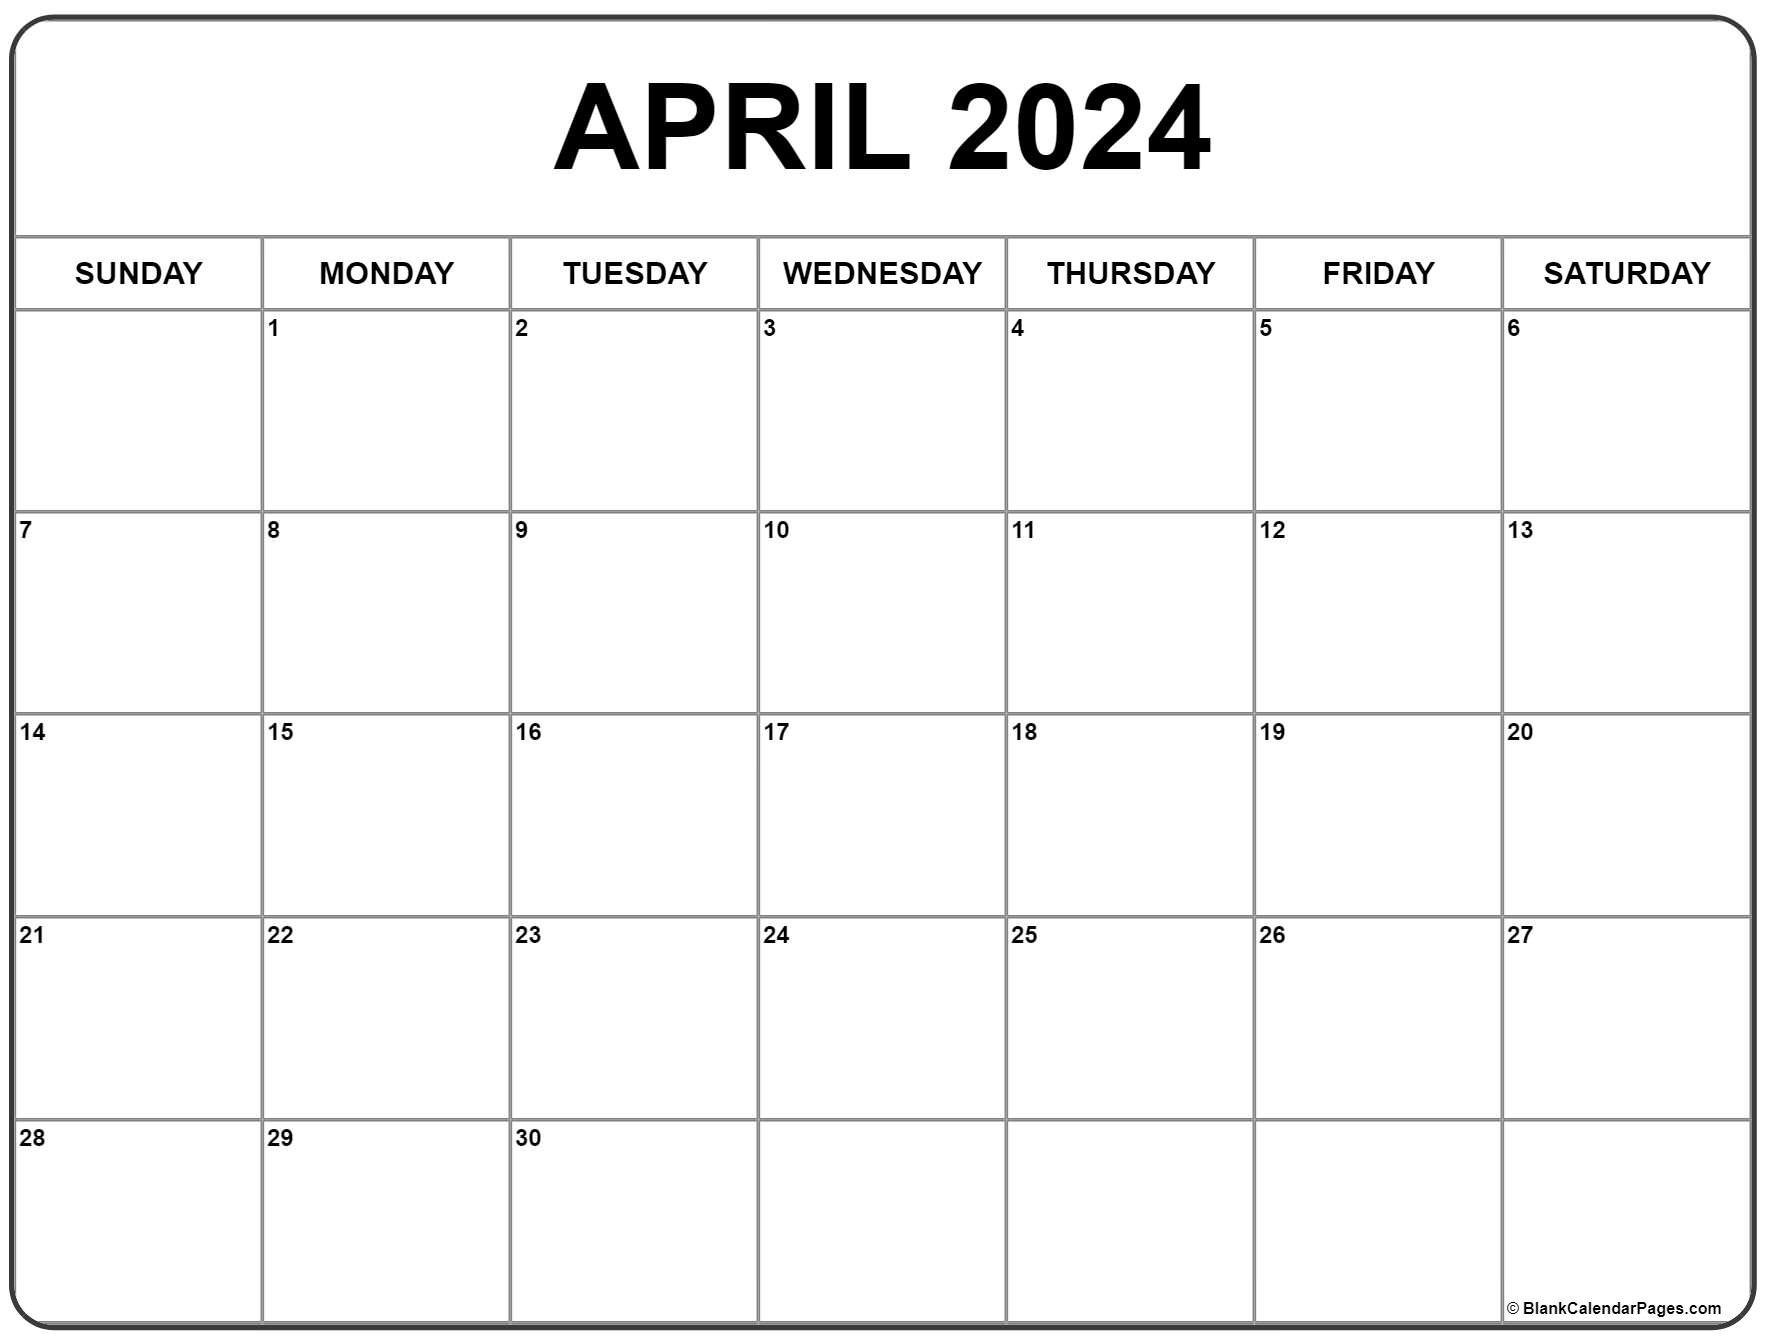 April 2024 Calendar | Free Printable Calendar for Monthly Calendar Printable April 2024